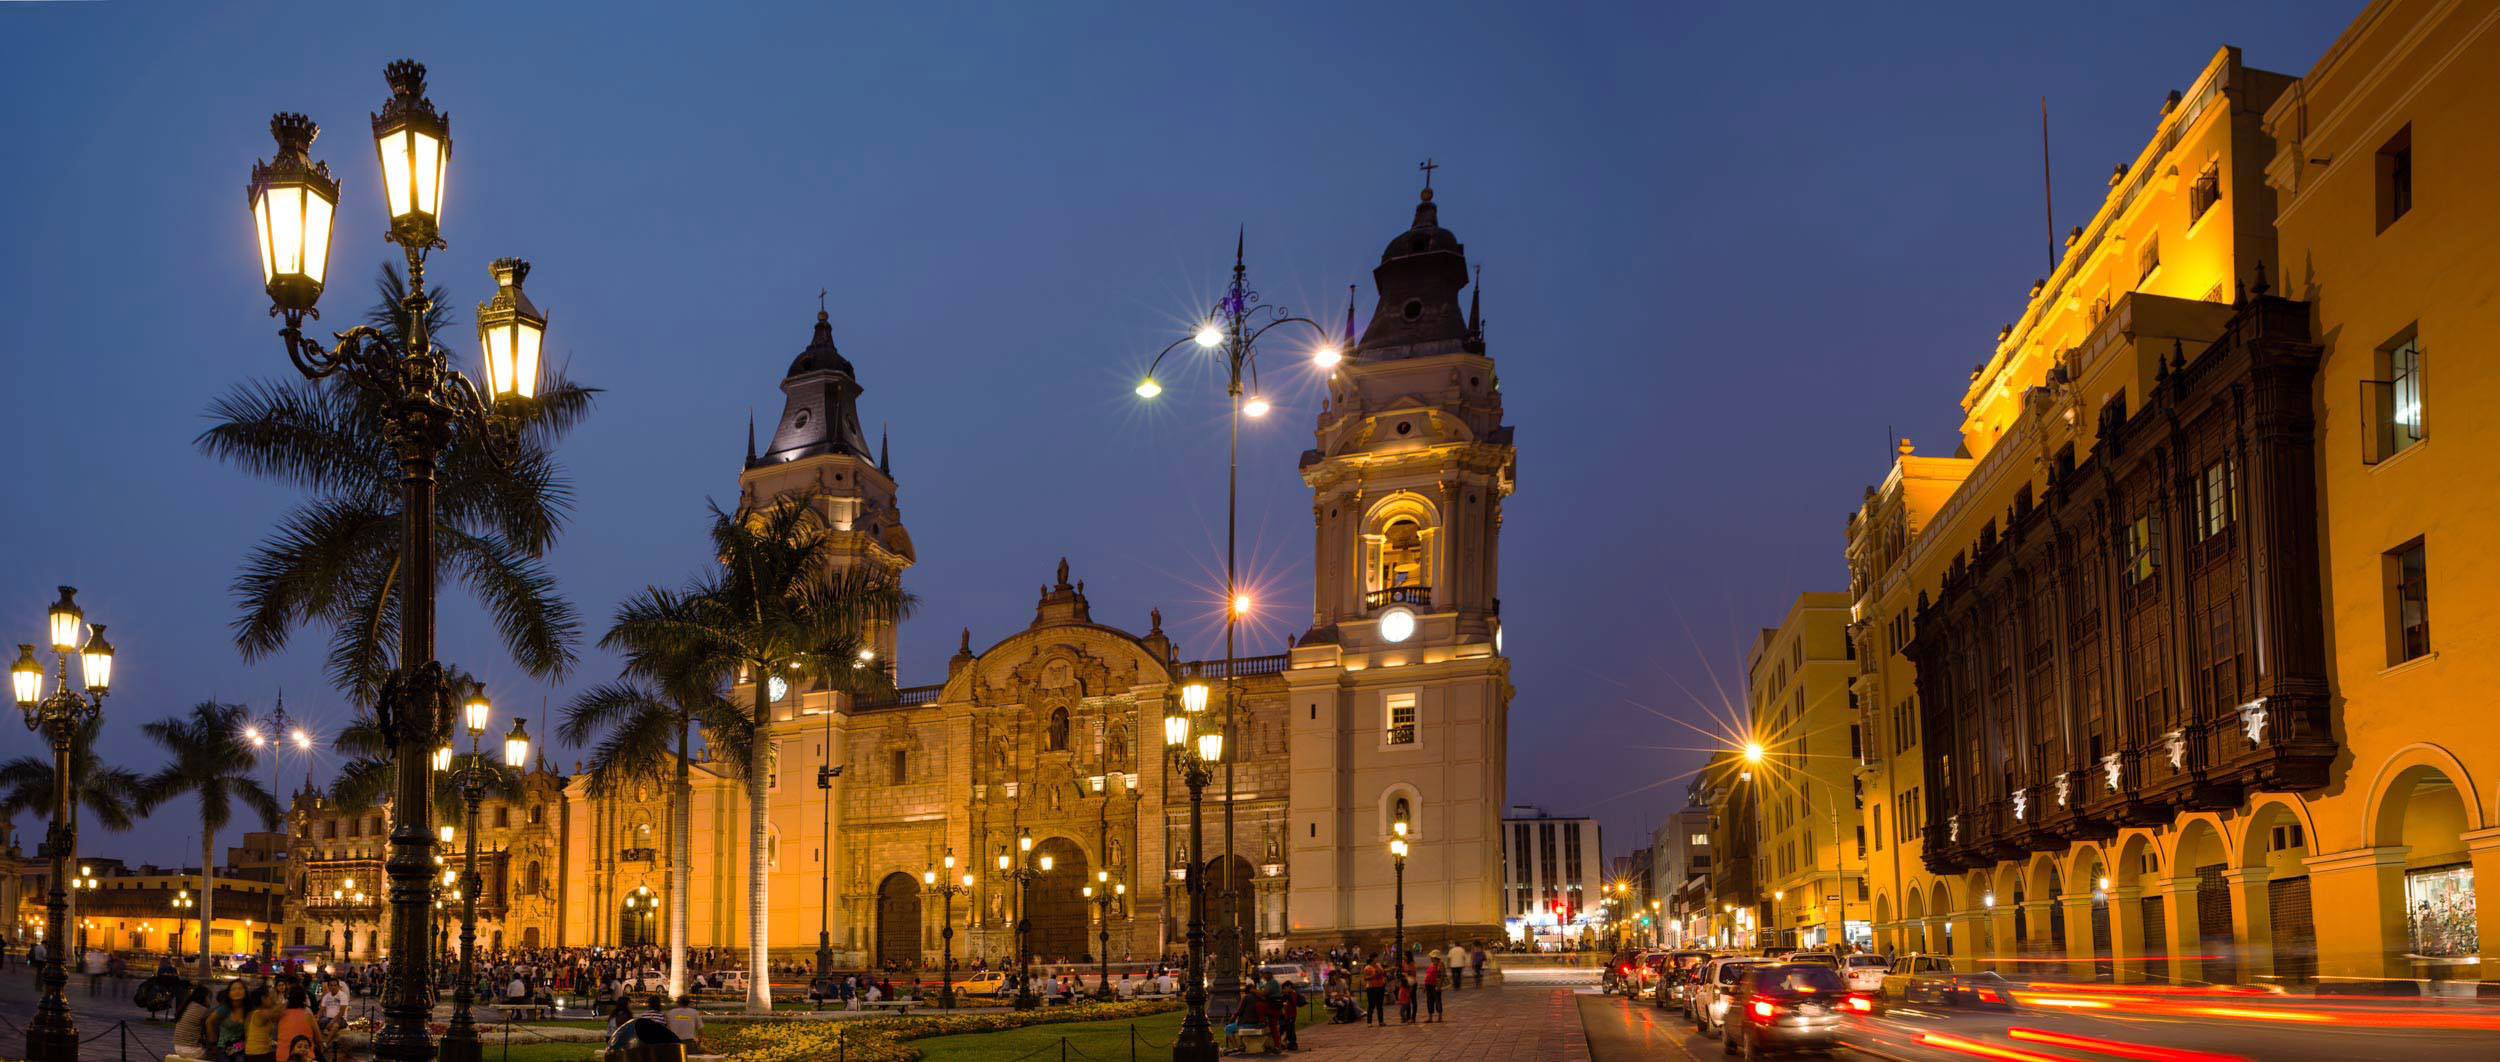 cathedral-plaza-armas-lima-peru-south-america